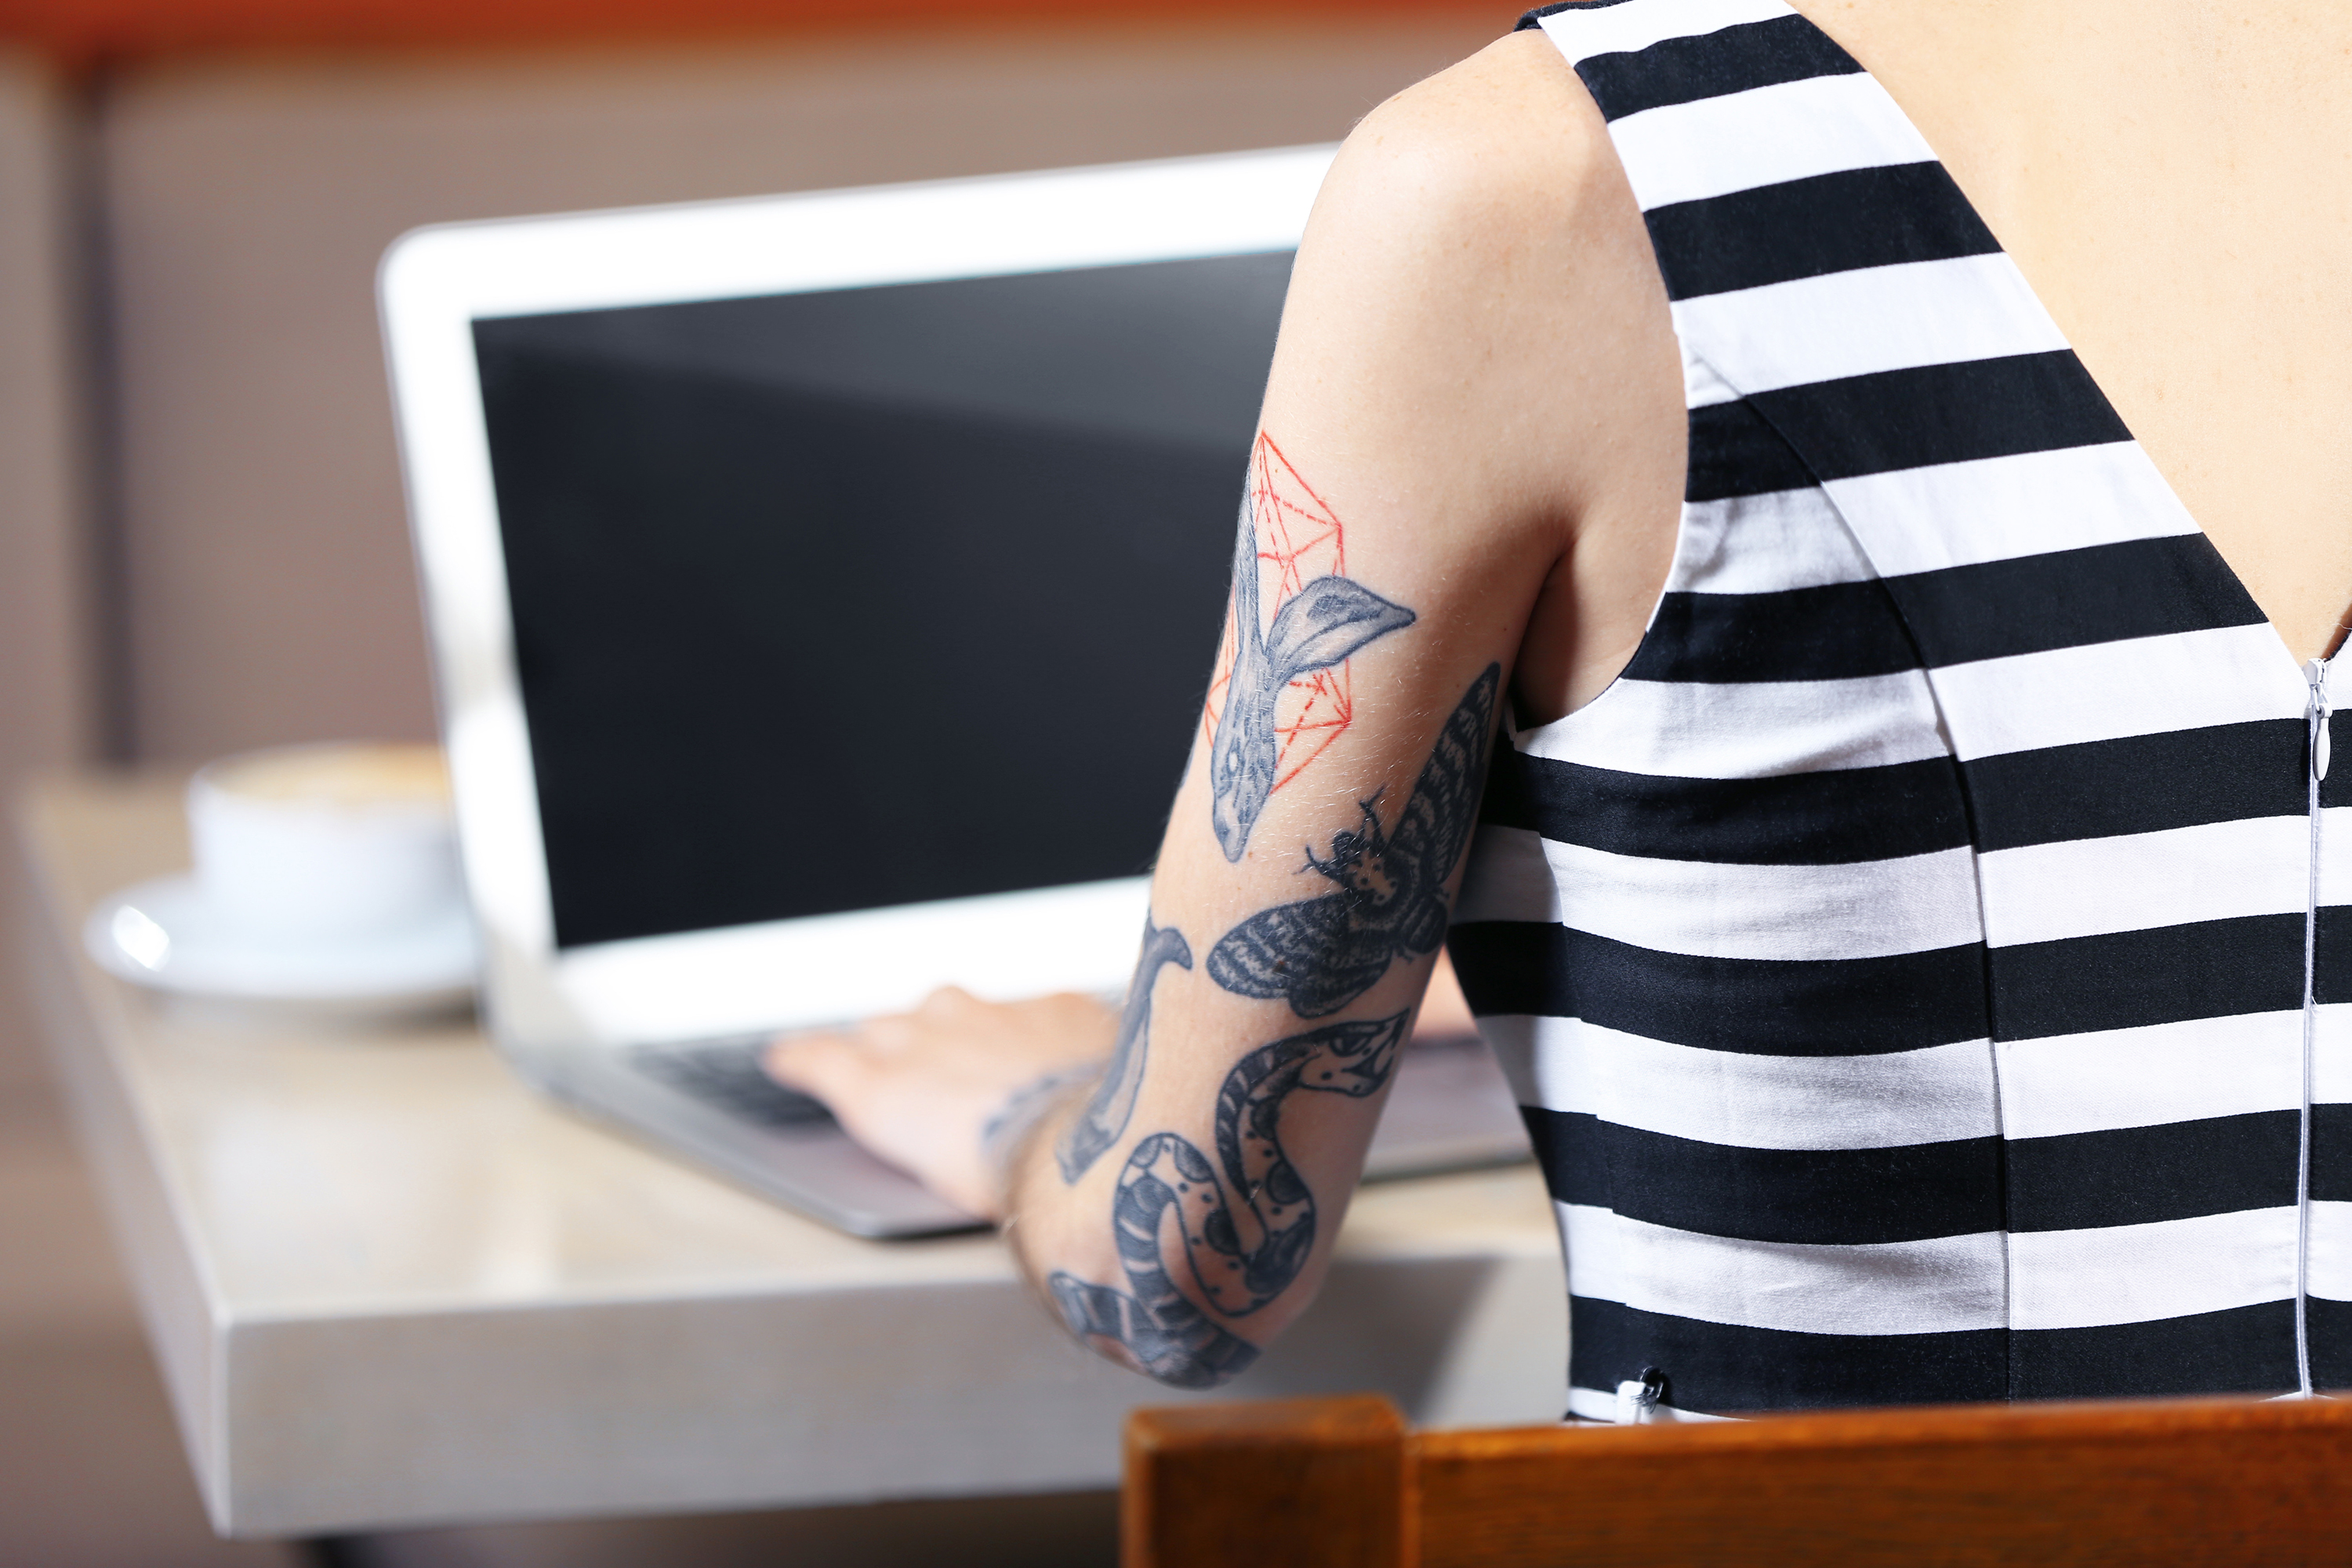 17 Best Tiny Tattoos  Small Tattoo Design Ideas and Inspiration